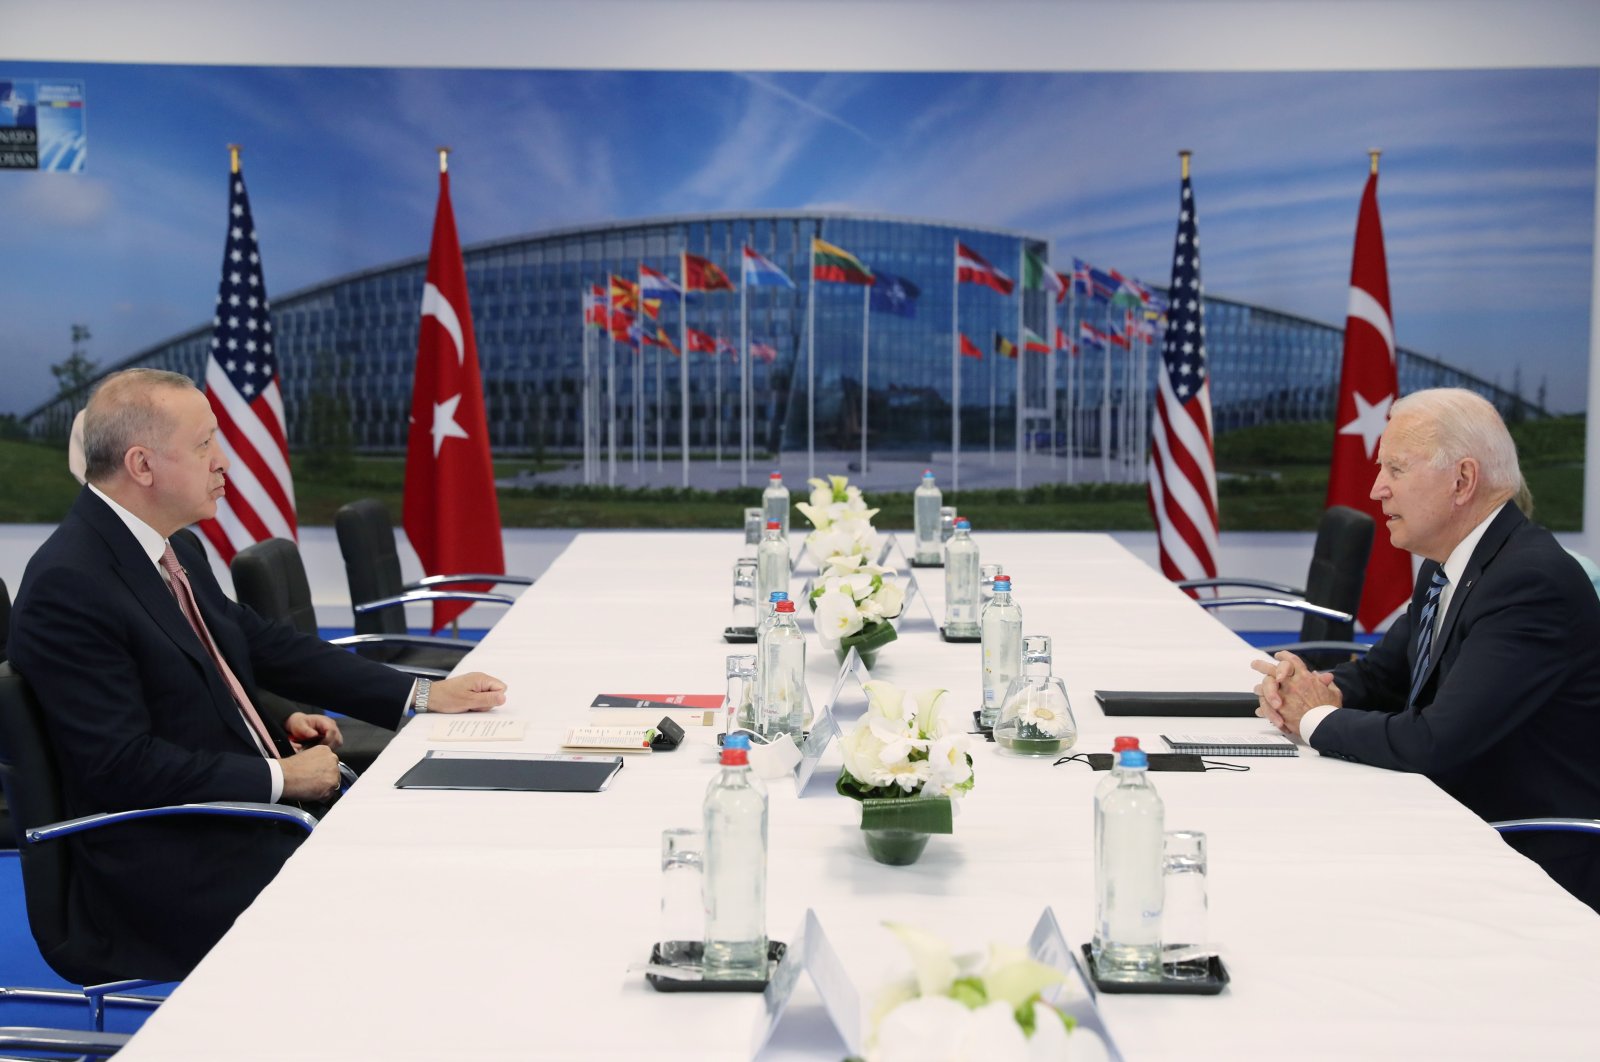 President Tayyip Erdoğan (L) and U.S. President Joe Biden attend a bilateral meeting on the sidelines of the NATO summit in Brussels, Belgium June 14, 2021. (REUTERS Photo)